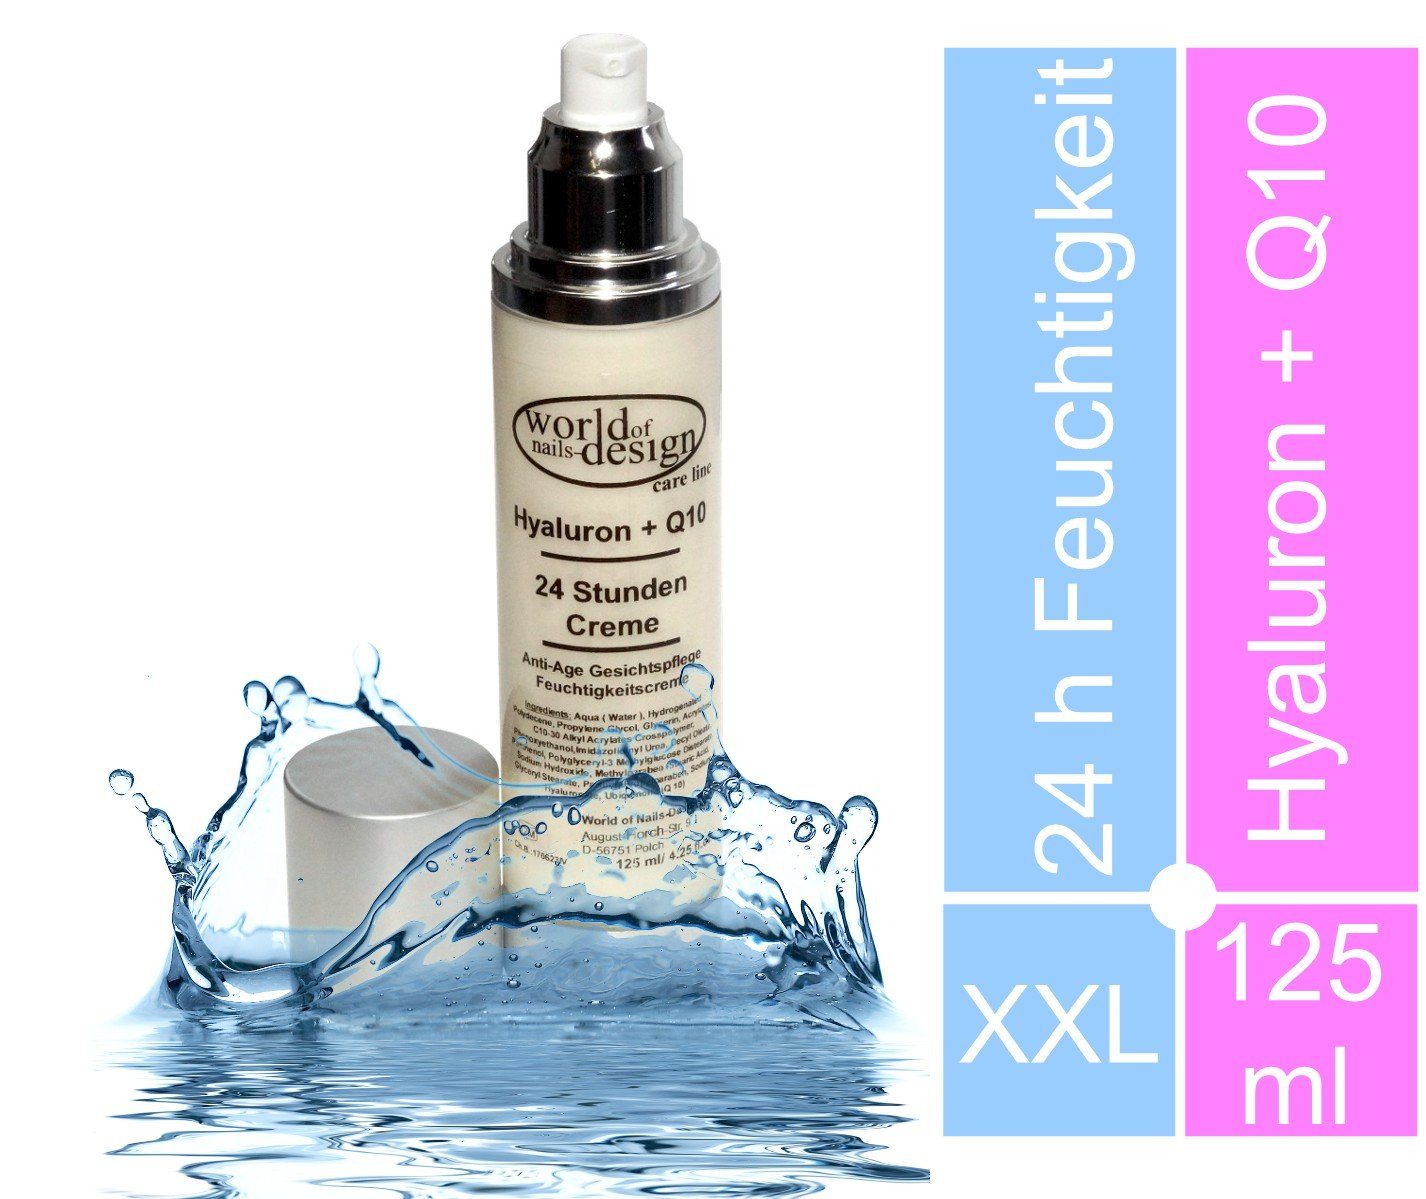 World of Stunden 24 Creme + Anti-Aging Q10, Nails-Design Feuchtigkeitscreme Hyaluron